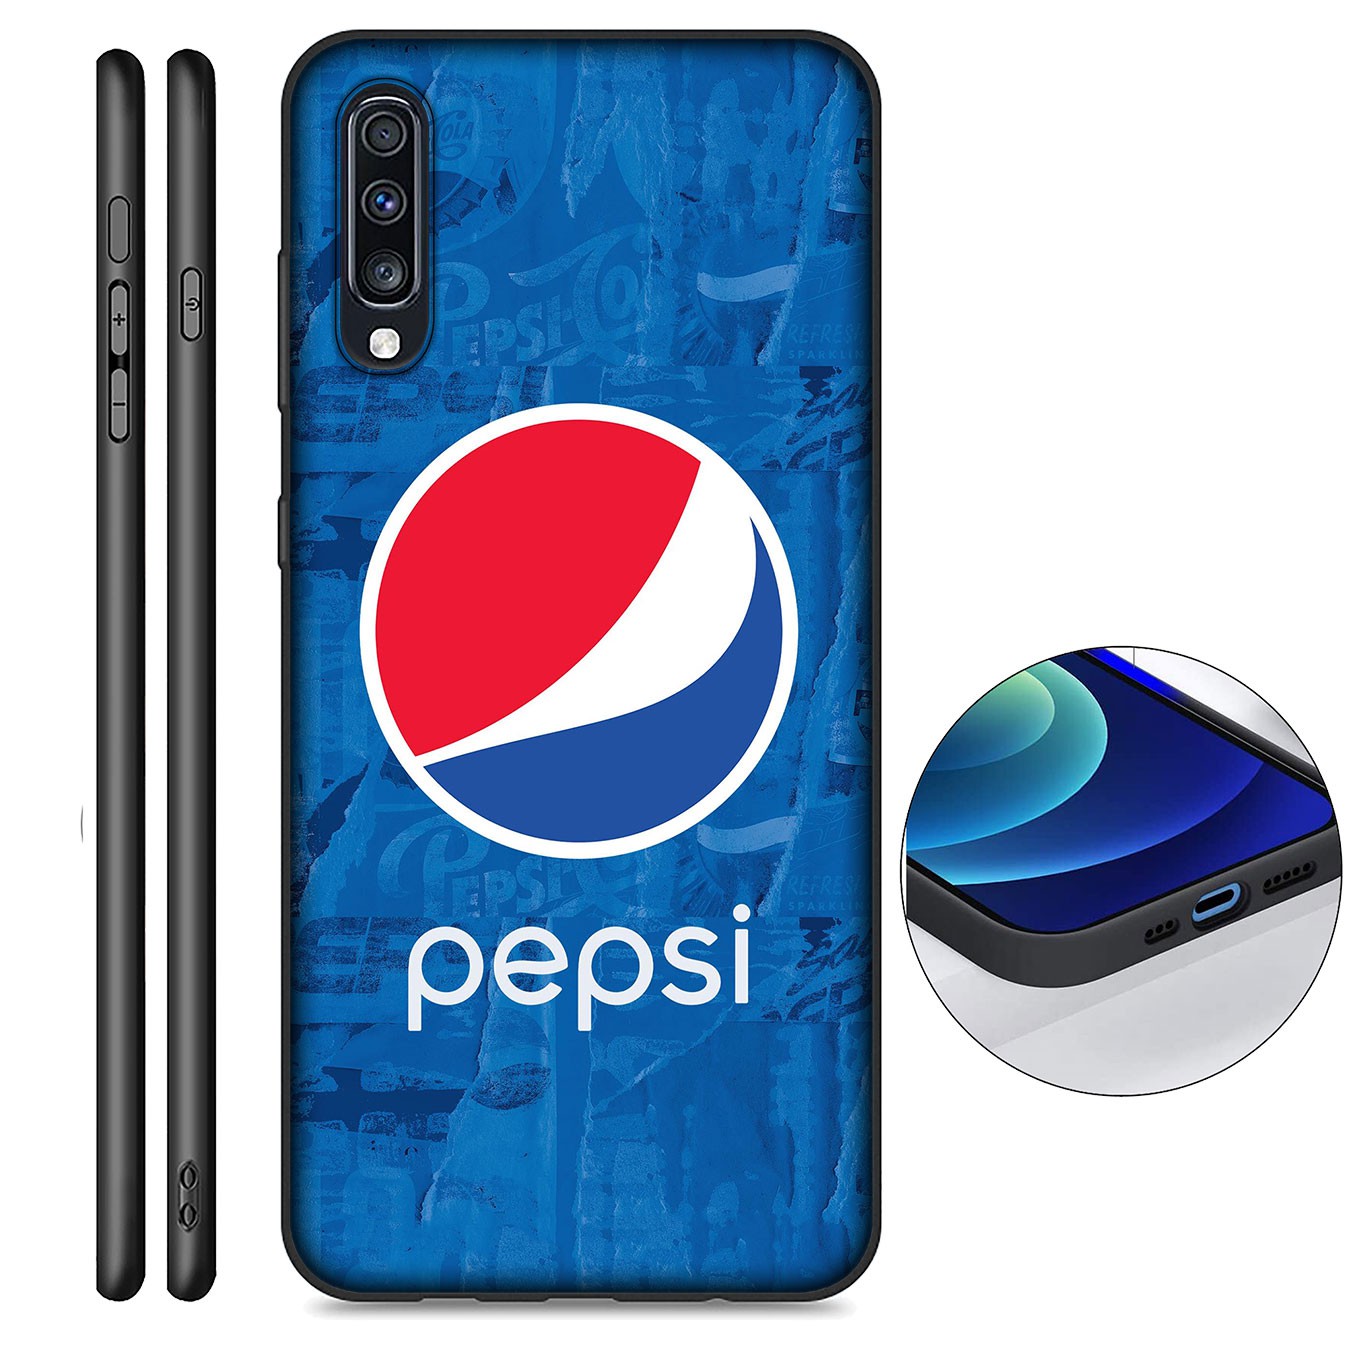 Samsung Galaxy S9 S10 S20 FE Ultra Plus Lite S20+ S9+ S10+ S20Plus Casing Soft Silicone Phone Case Pepsi Cola Cover